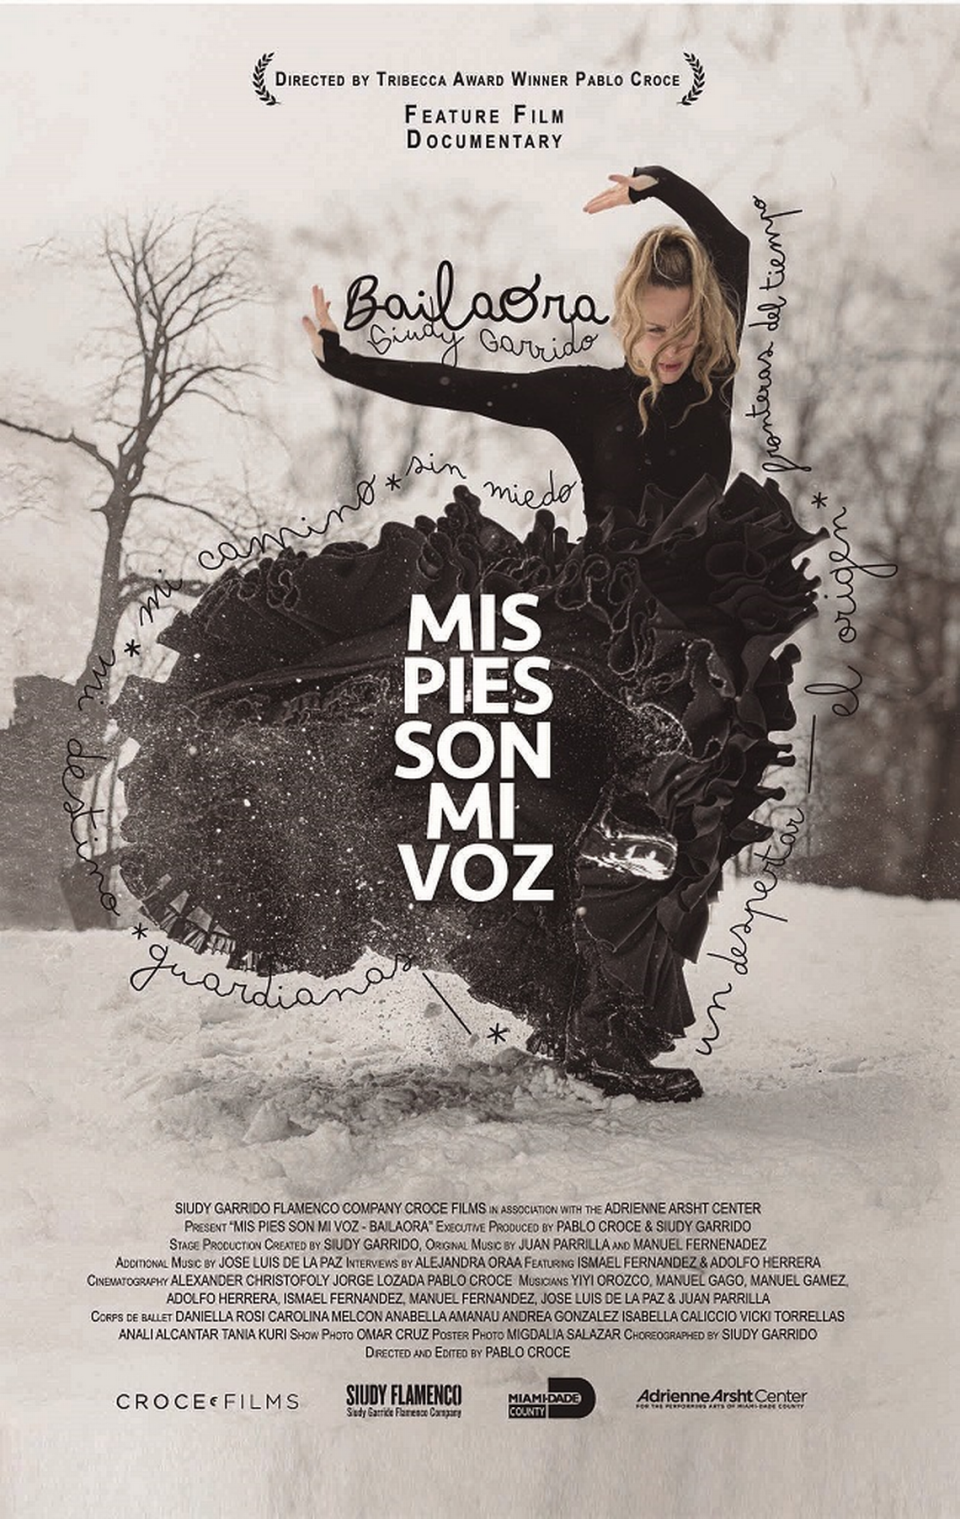 Afiche promocional de la película documental “Bailaora, mis pies son mi voz”.